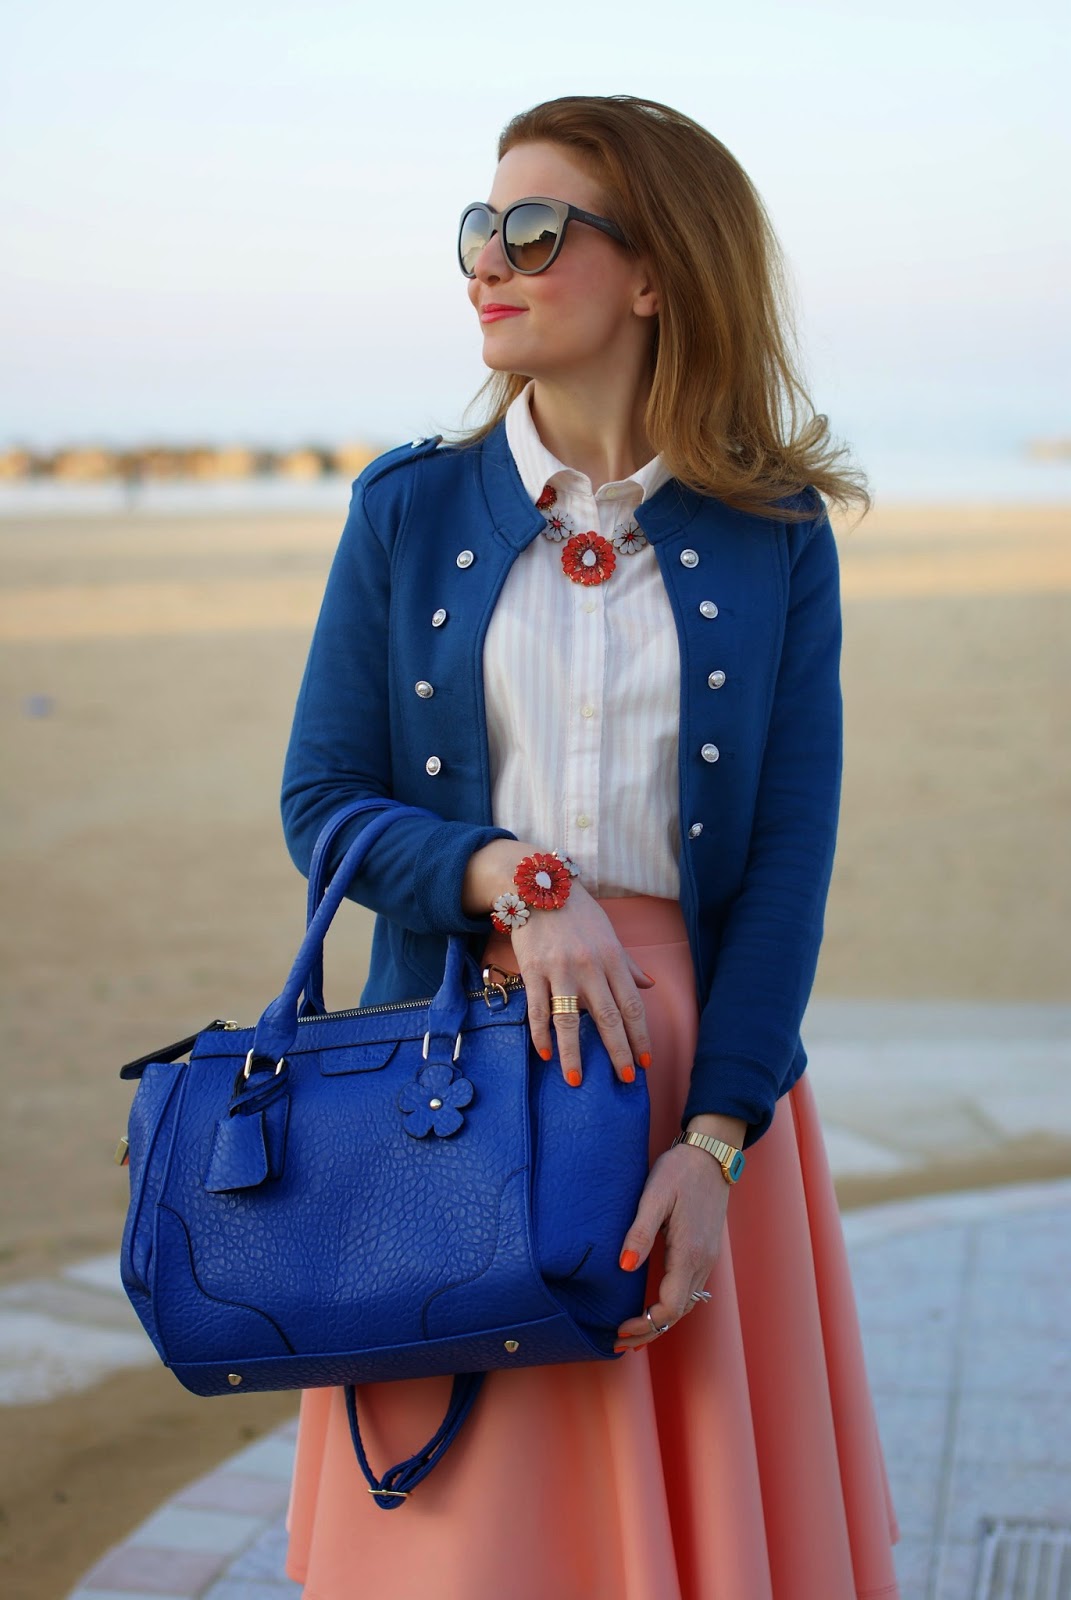 Sodini primavera estate 2014, orange necklace and bracelet, Fashion and Cookies, fashion blogger